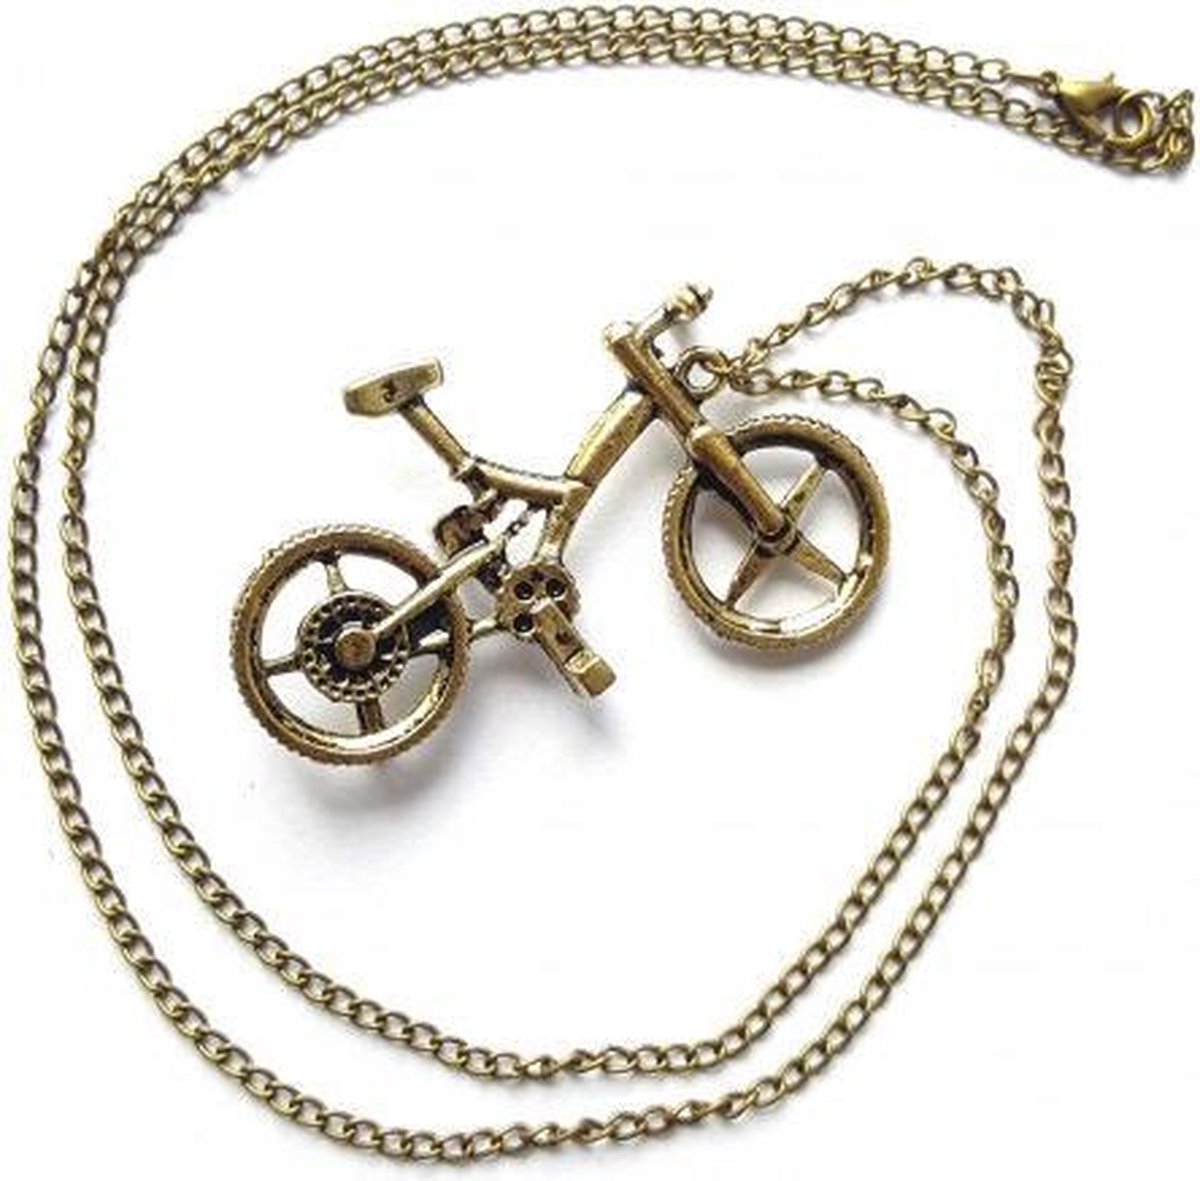 Retro ketting lang met bronskleurige fiets hanger